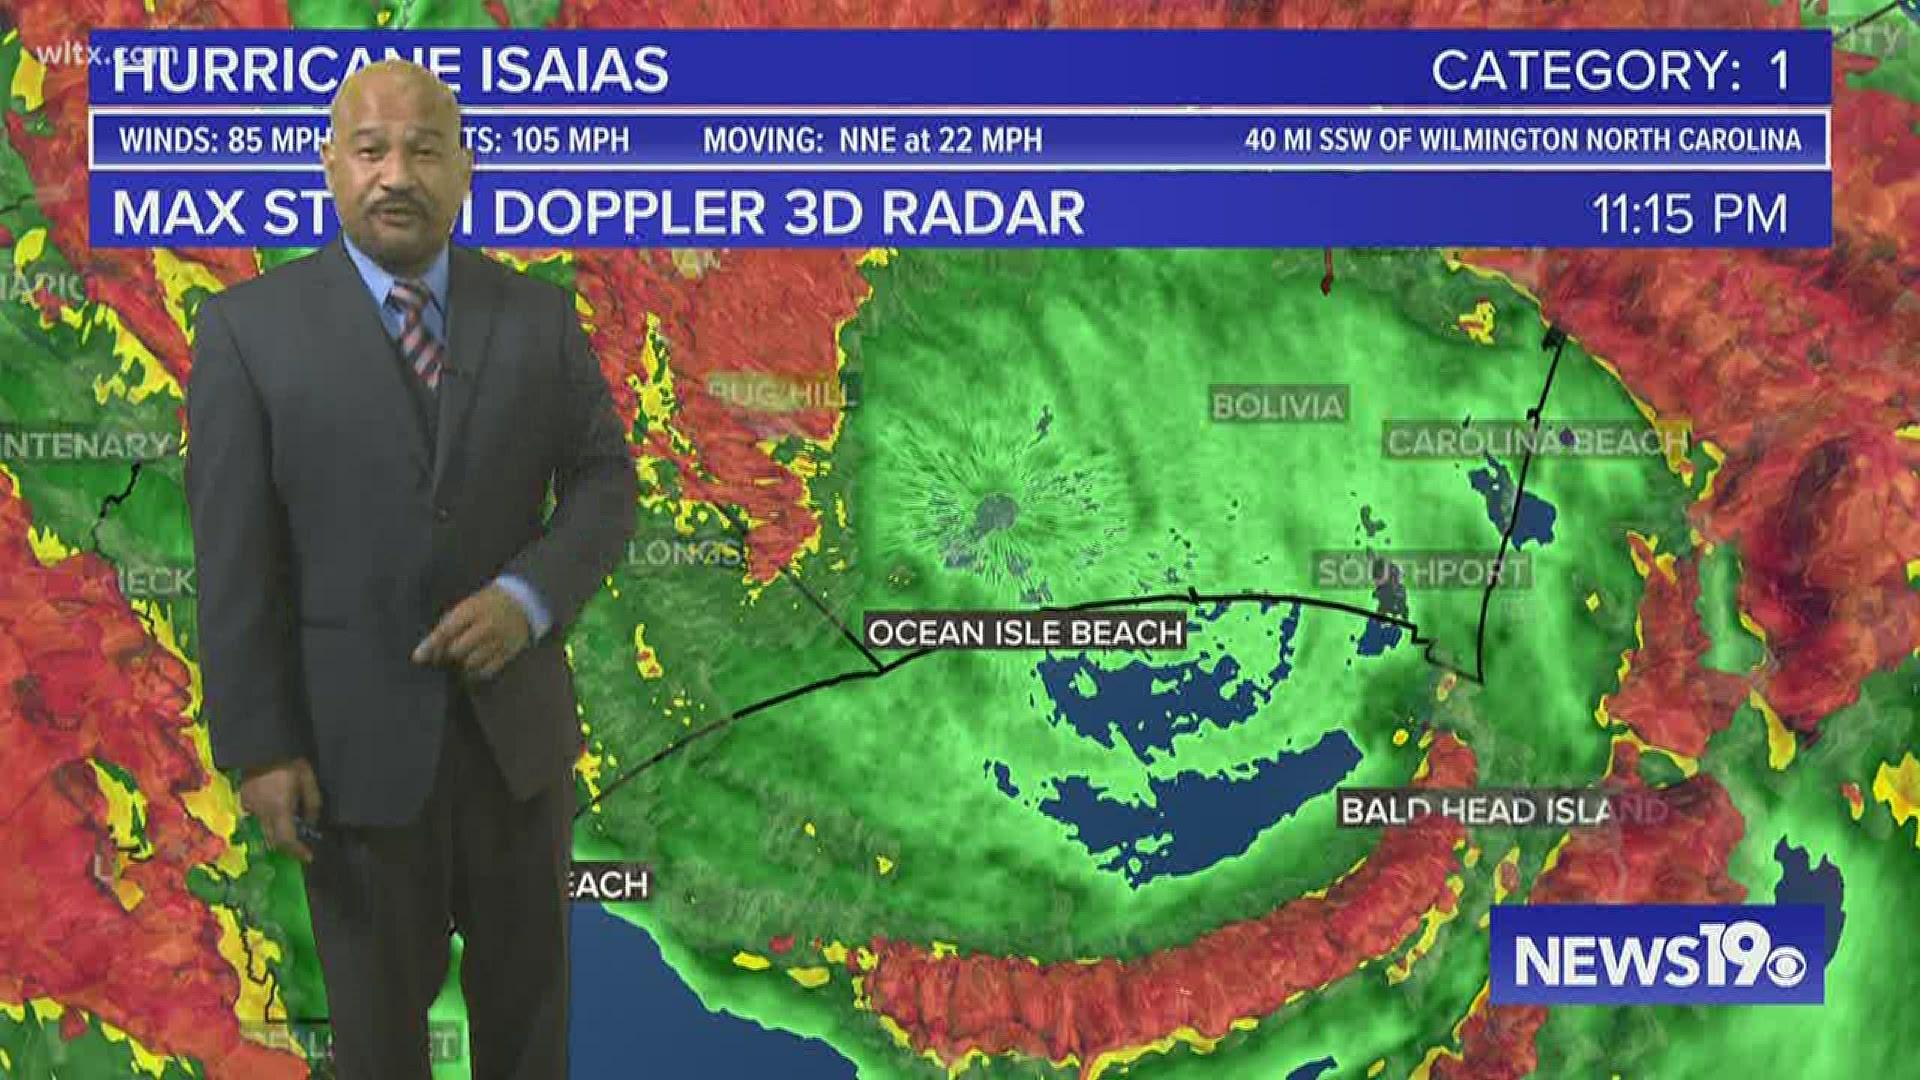 Isaias made landfall in North Carolina around 11:10 p.m., leaving damage and flooding along the Grand Strand along the way.